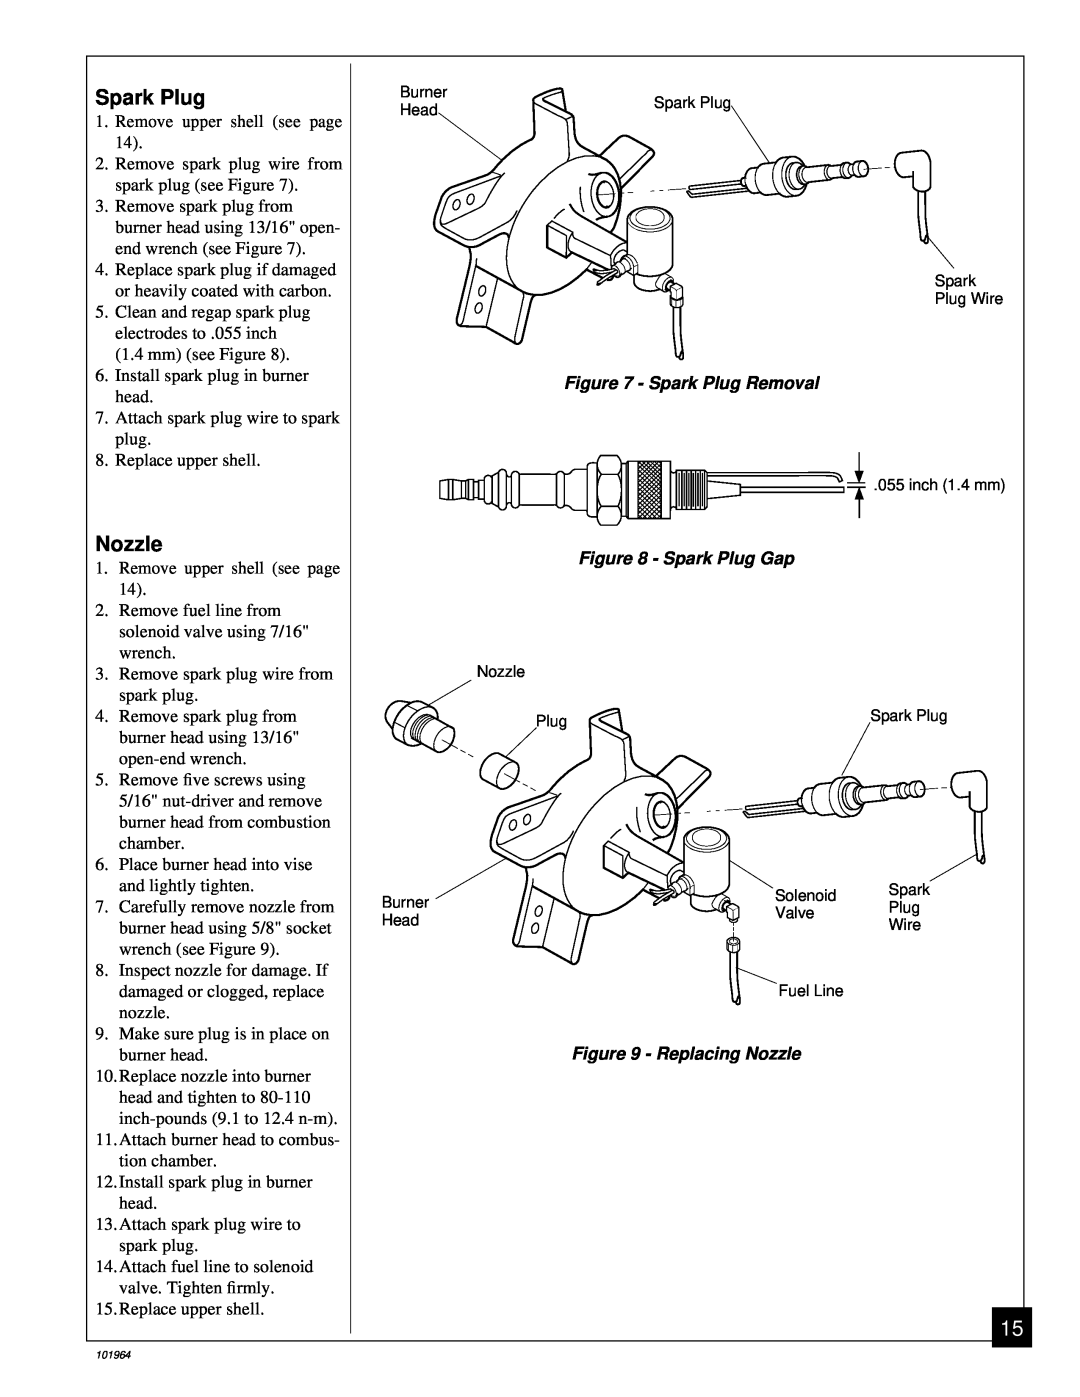 Desa B350CE owner manual Spark Plug Removal, Spark Plug Gap, Replacing Nozzle 